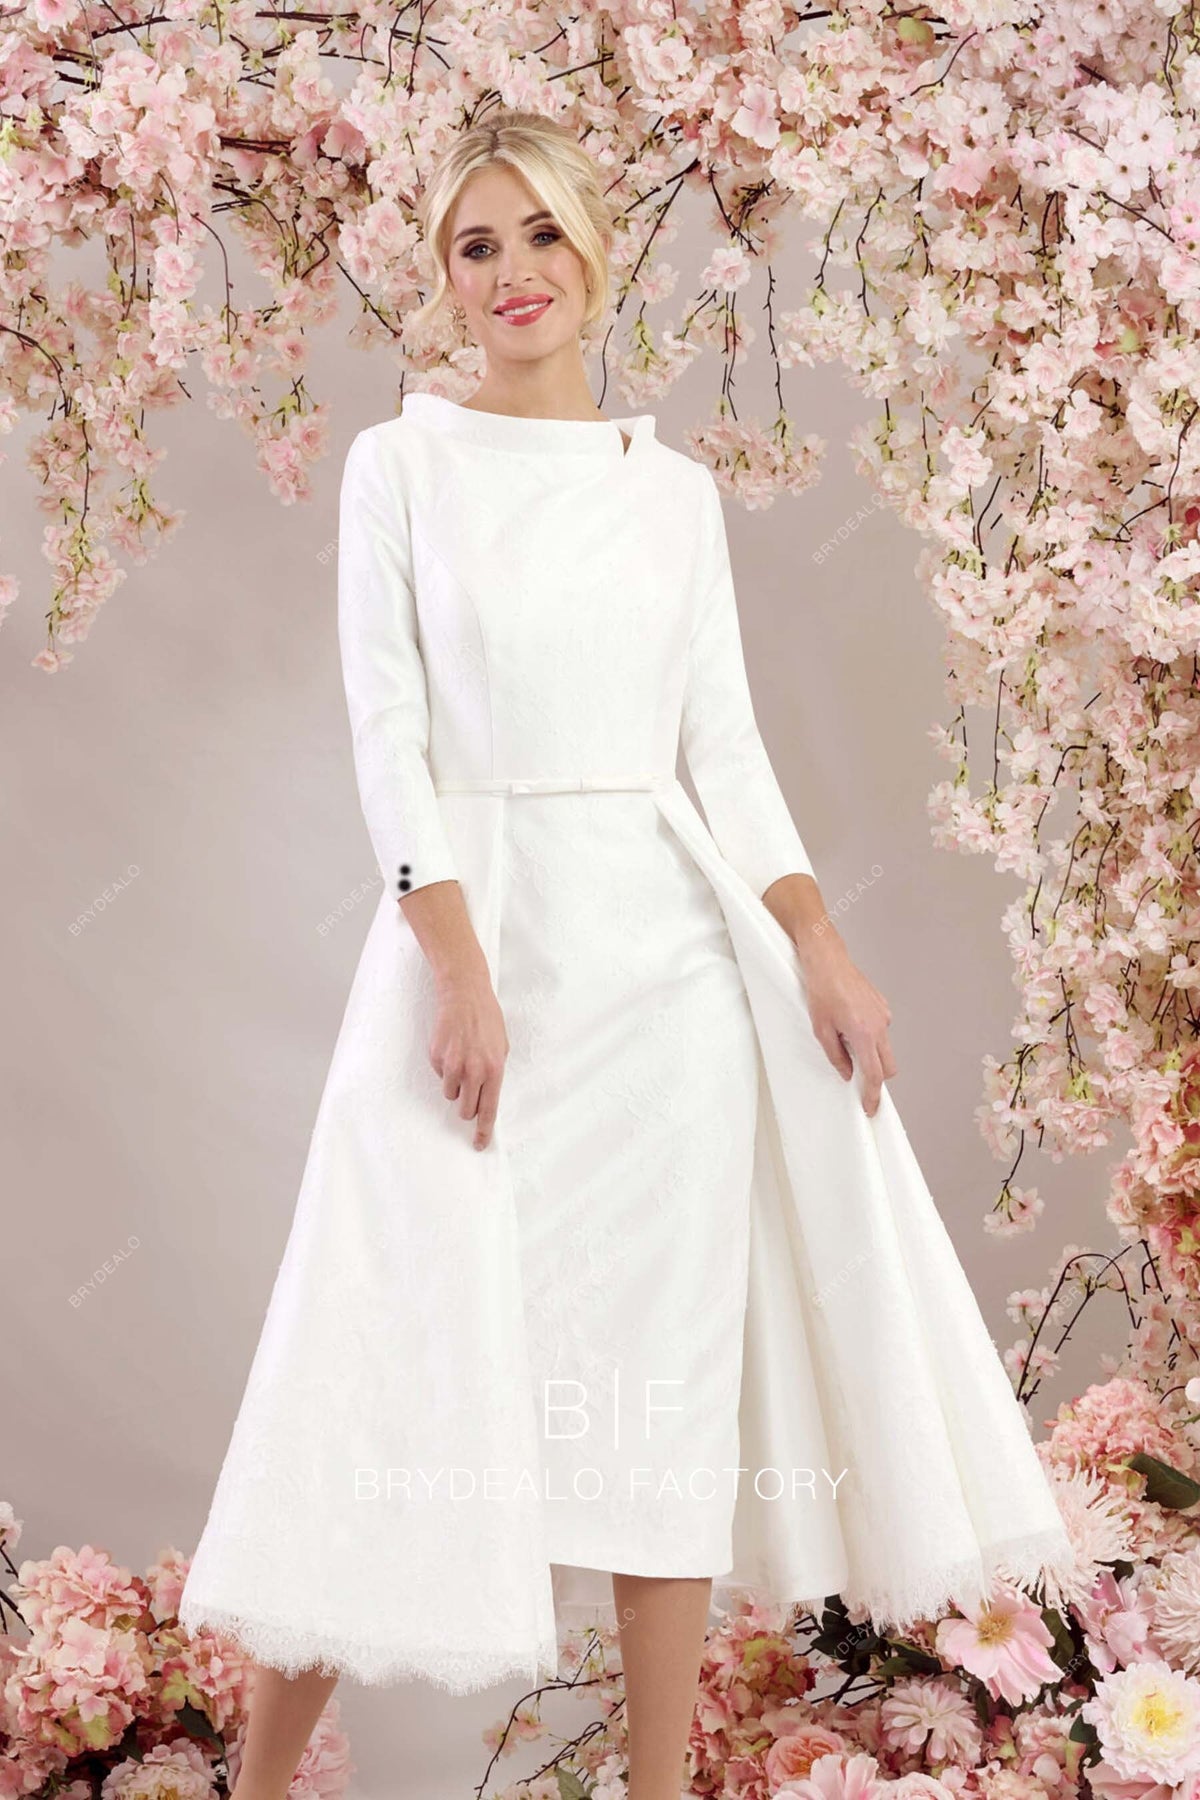 Demure Vintage Lace Tea Length Wedding Dress Timeless Design Aline Skirt Bridal Gown with Pockets Elopement Modern Style Modest Design